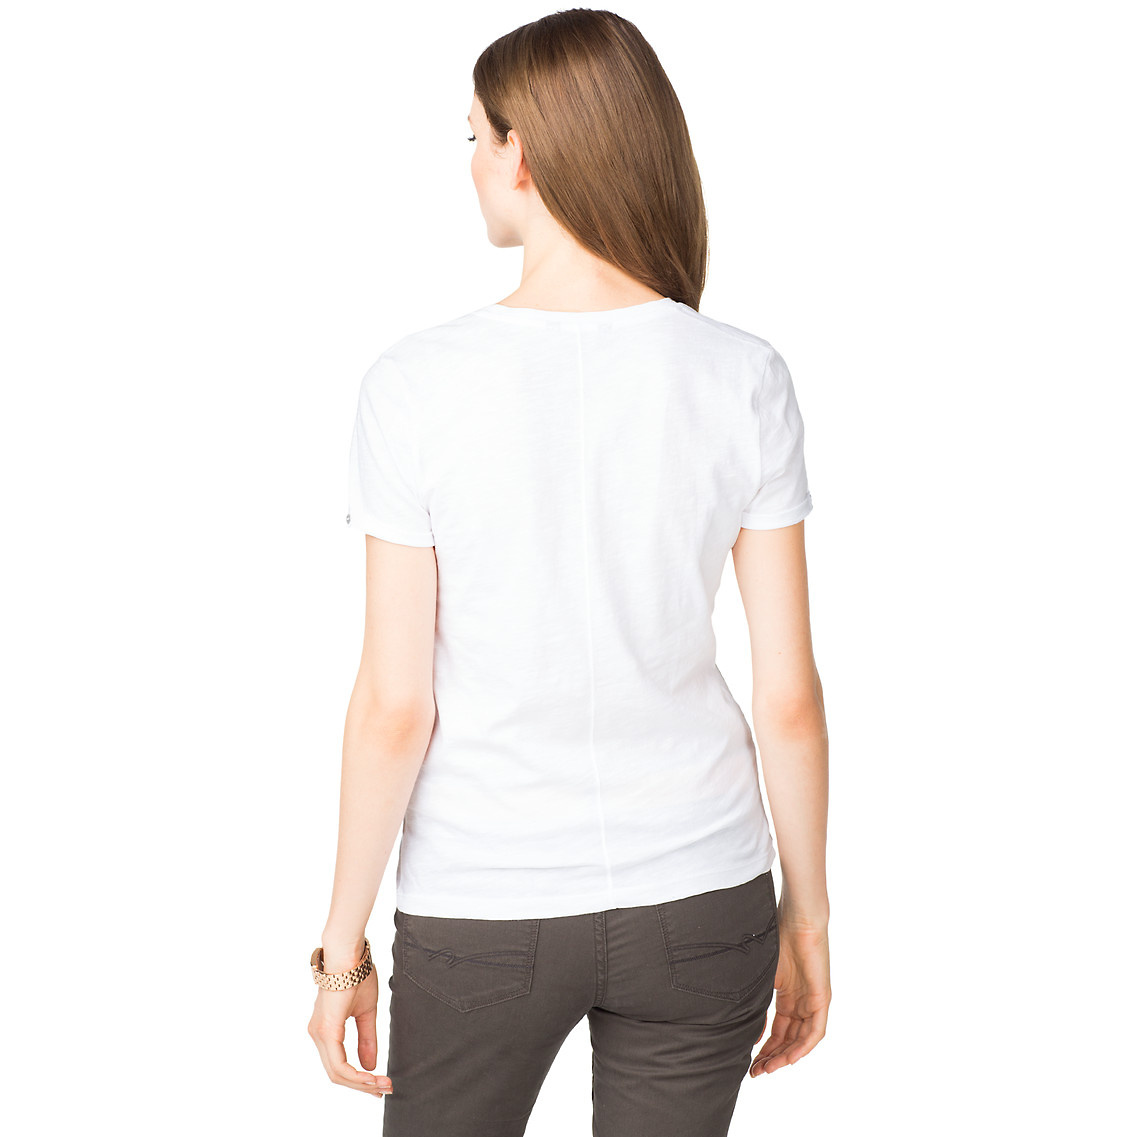 Tommy Hilfiger női fehér pamut T-shirt 2015 fotója